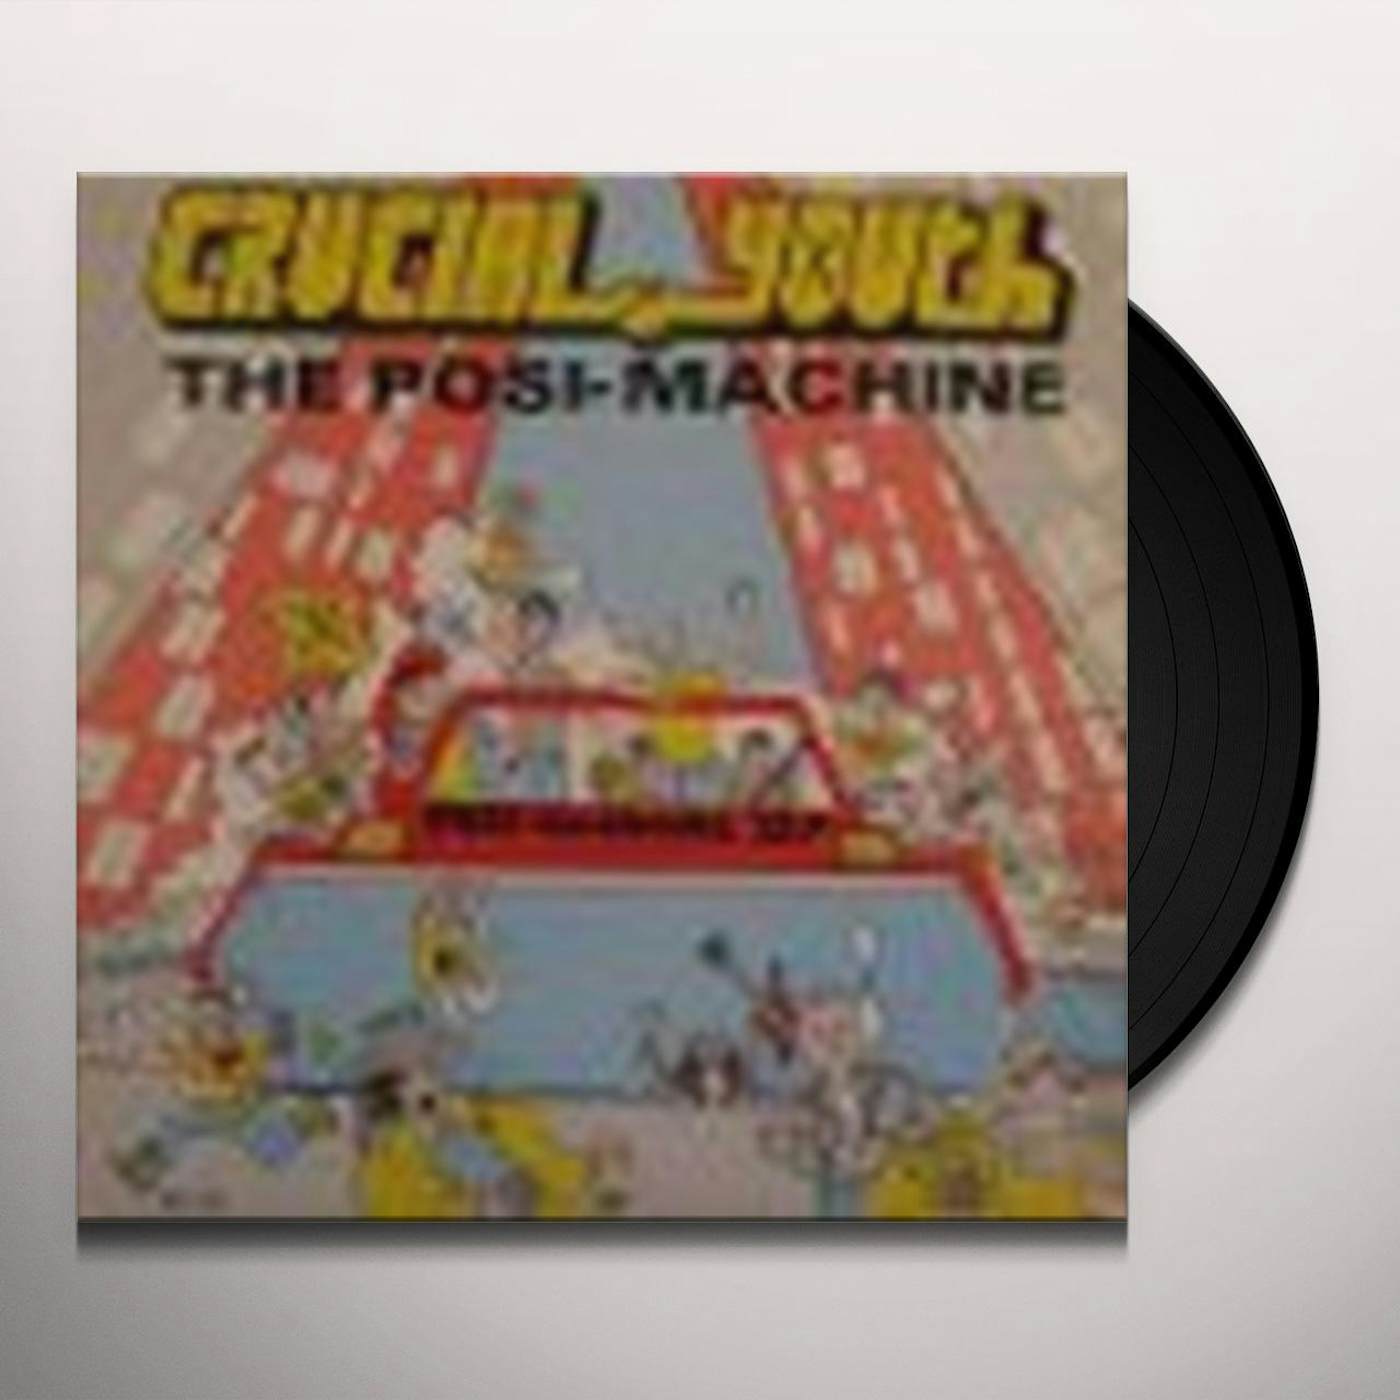 Crucial Youth POSI-MACHINE Vinyl Record